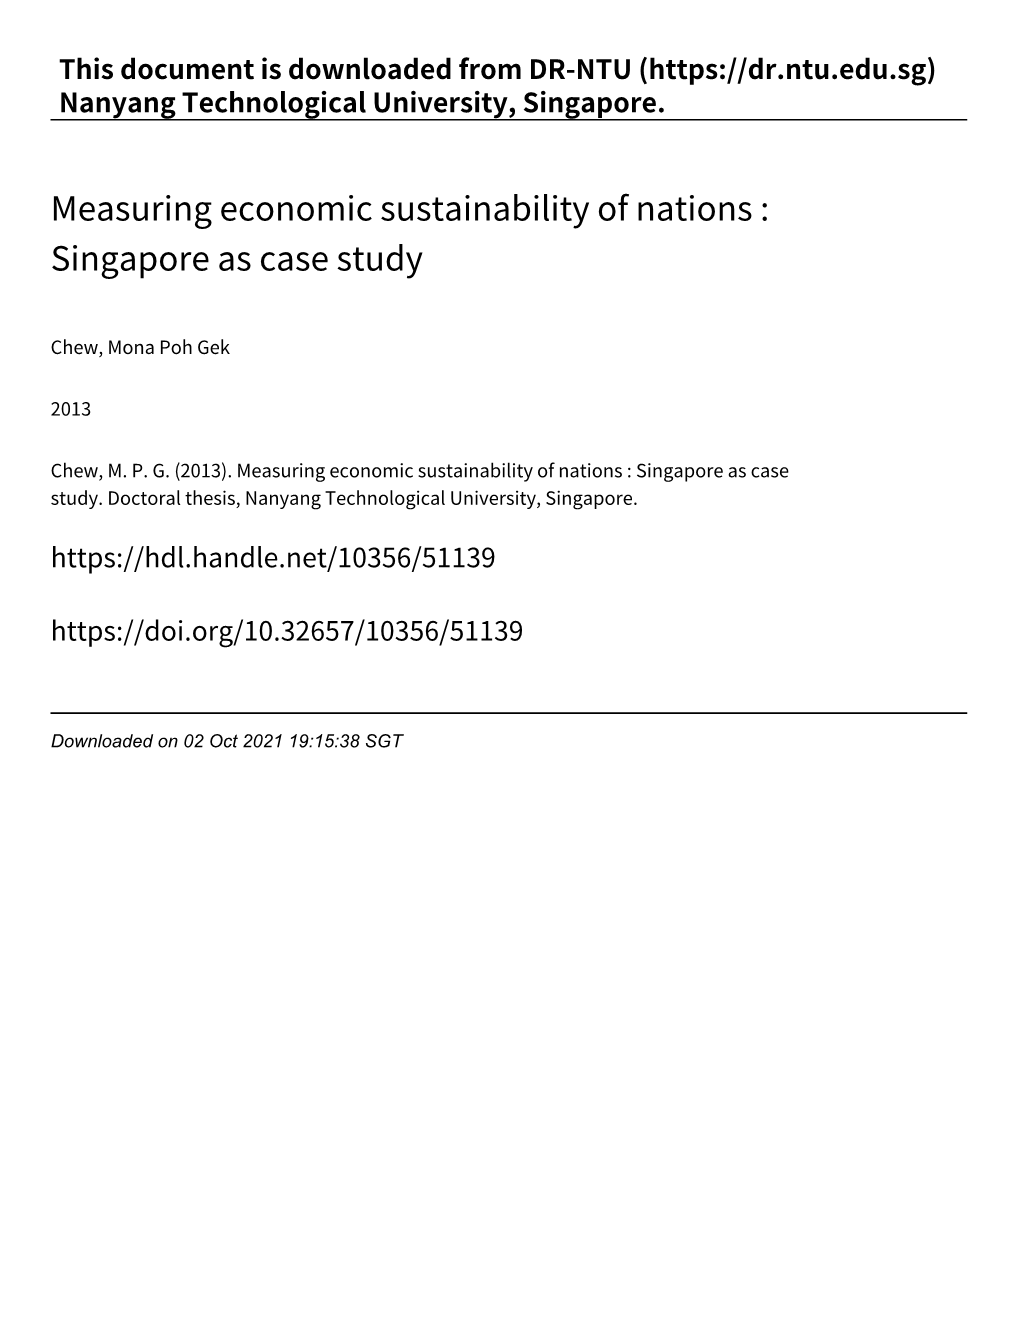 Measuring Economic Sustainability of Nations : Singapore As Case Study